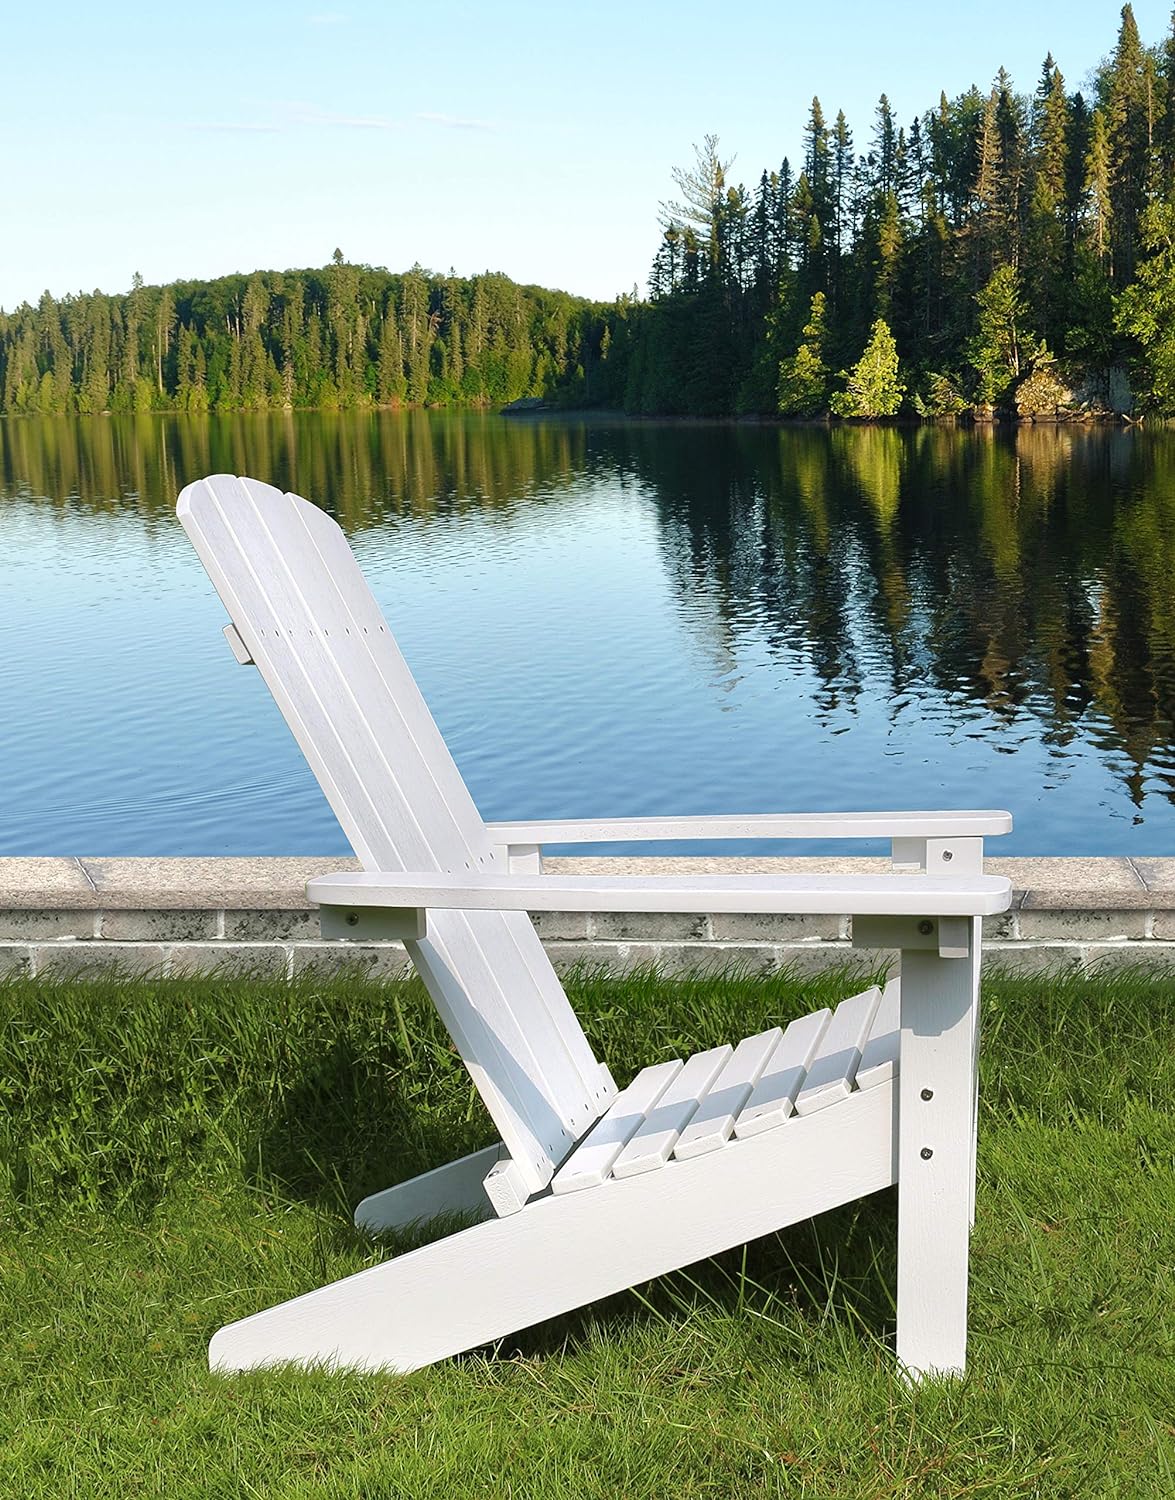 Lakeside Faux Wood Adirondack Chair, White